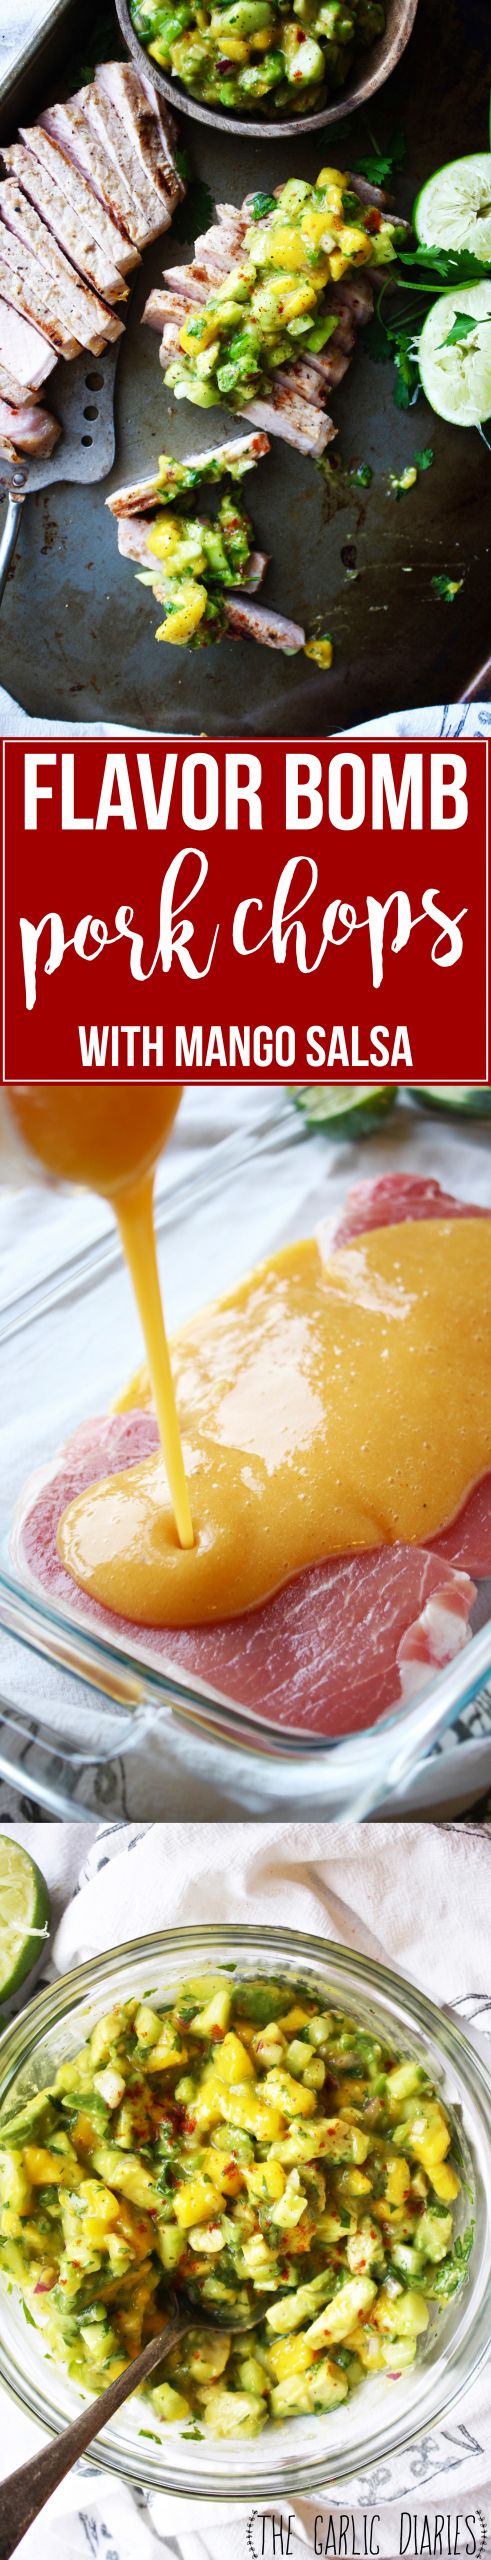 Pork Chops With Mango Salsa
 Flavor Bomb Pork Chops with Mango Salsa